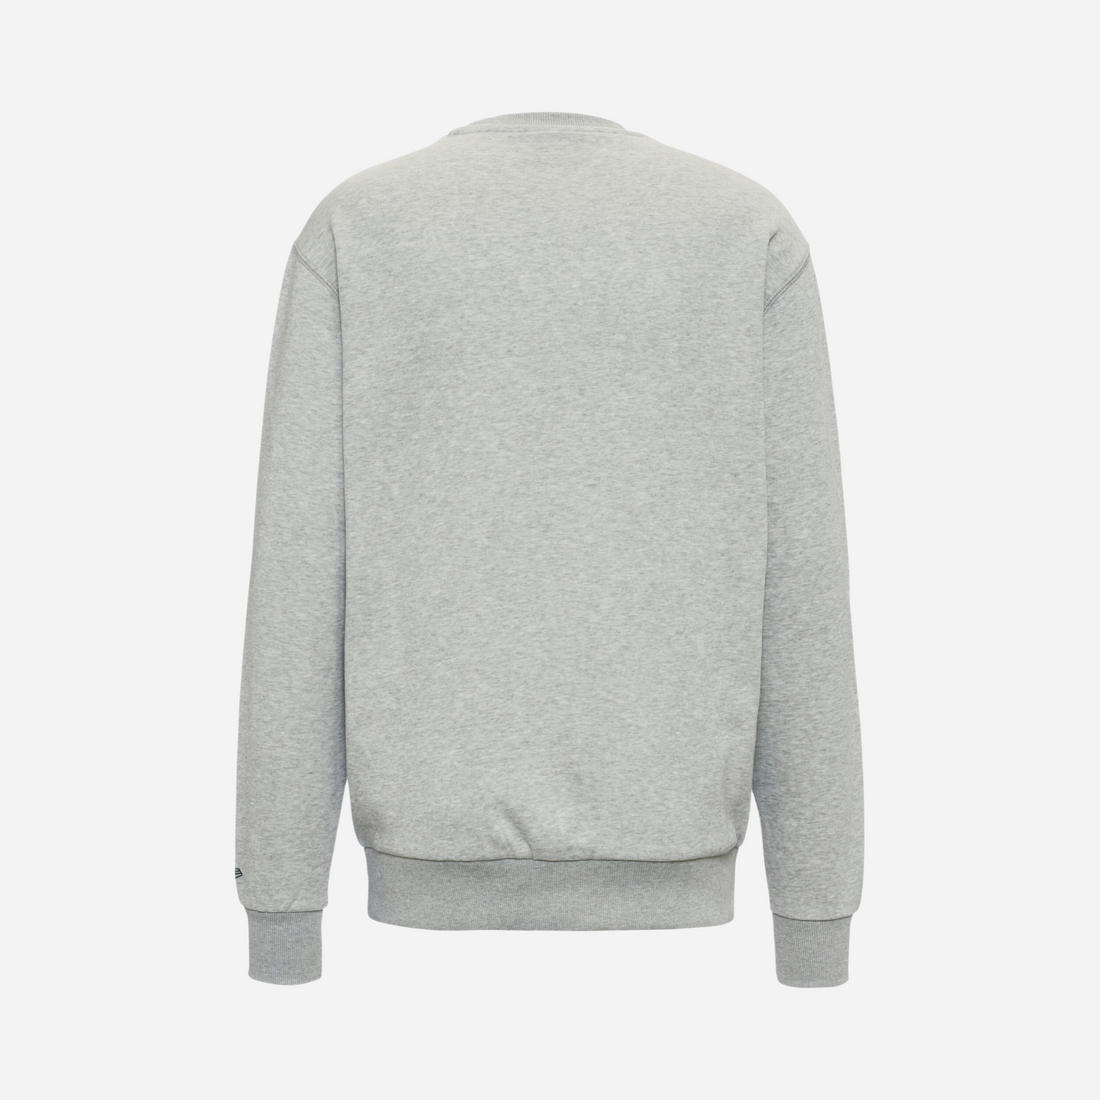 New Era New Era Heritage Sweatshirt Grey - Hympala Store 